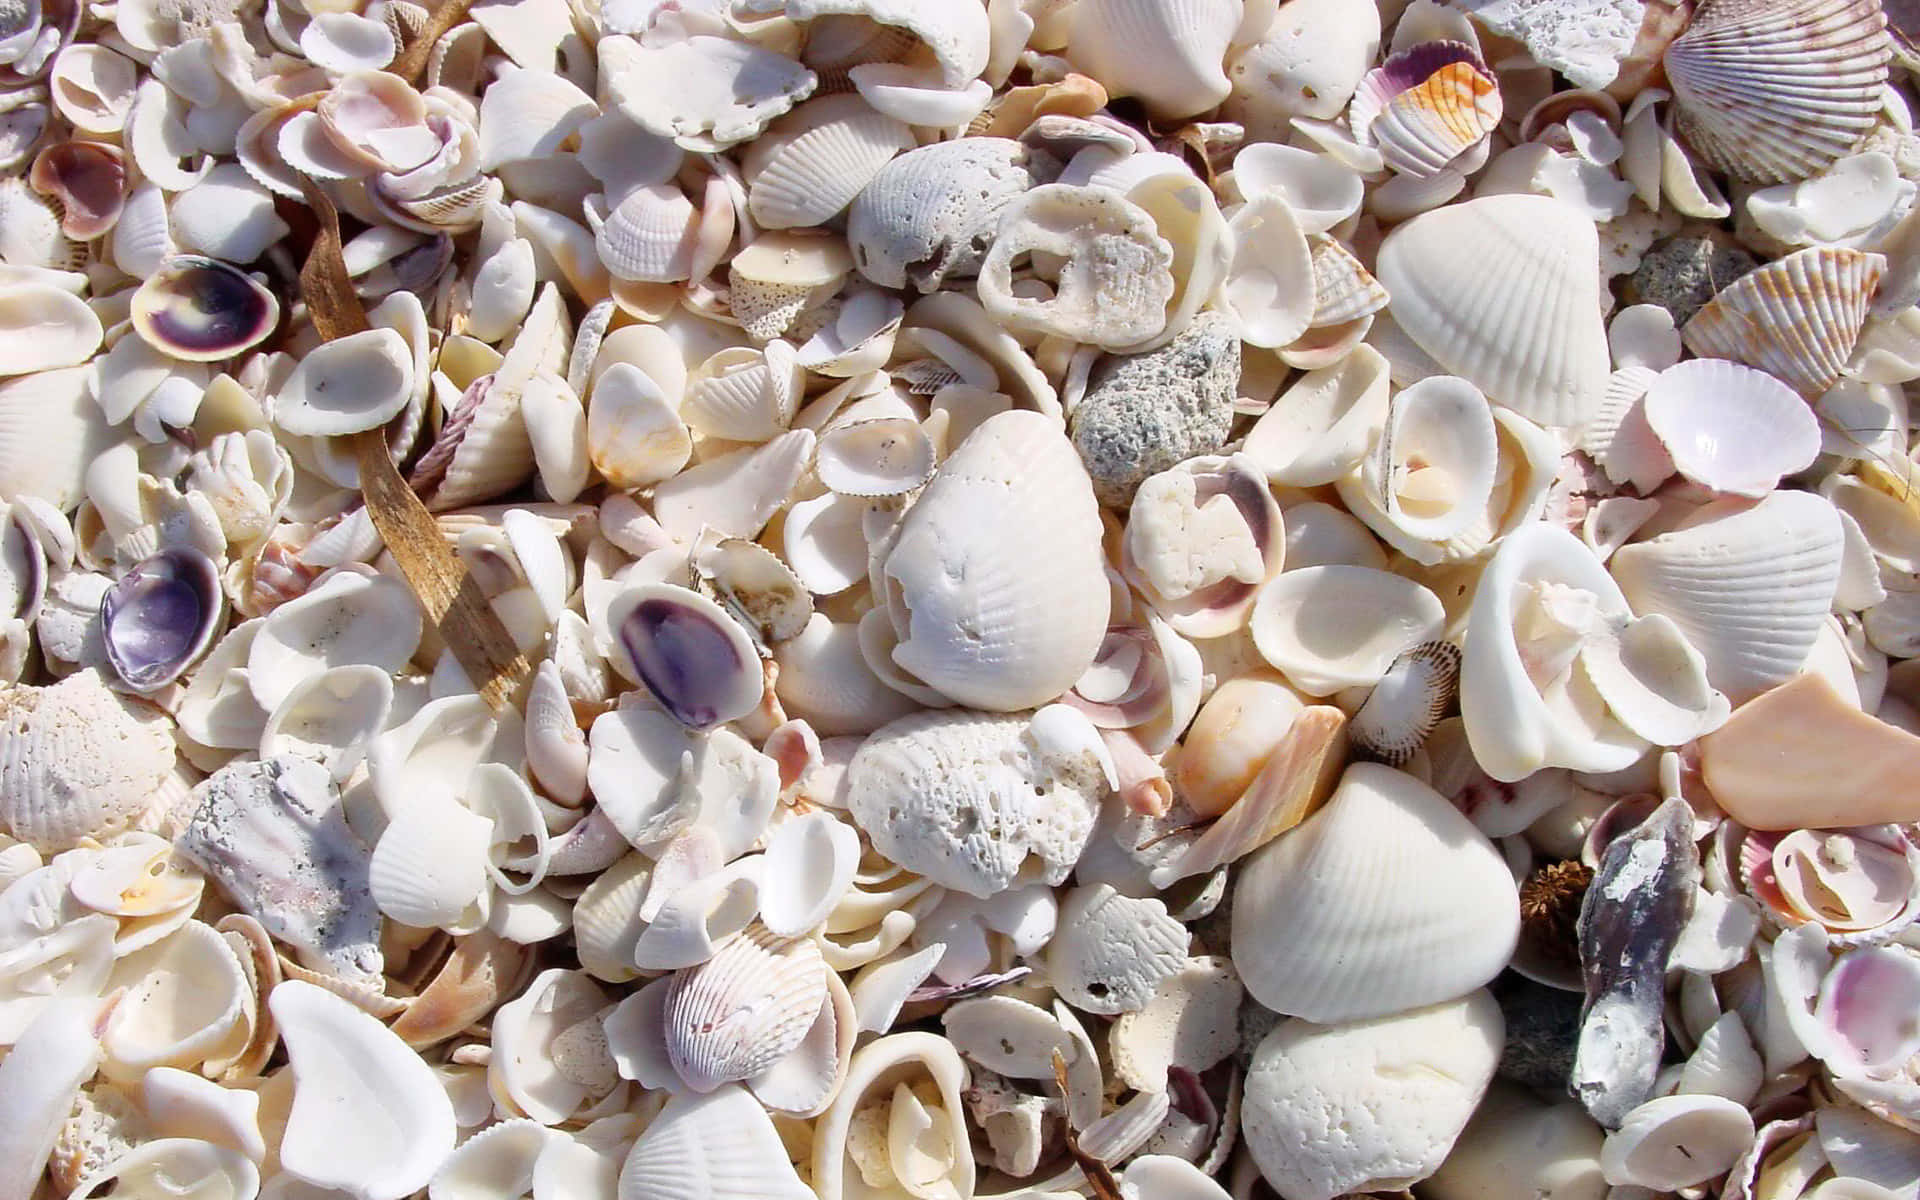 Enchanting Seashell Collection on a Sandy Beach